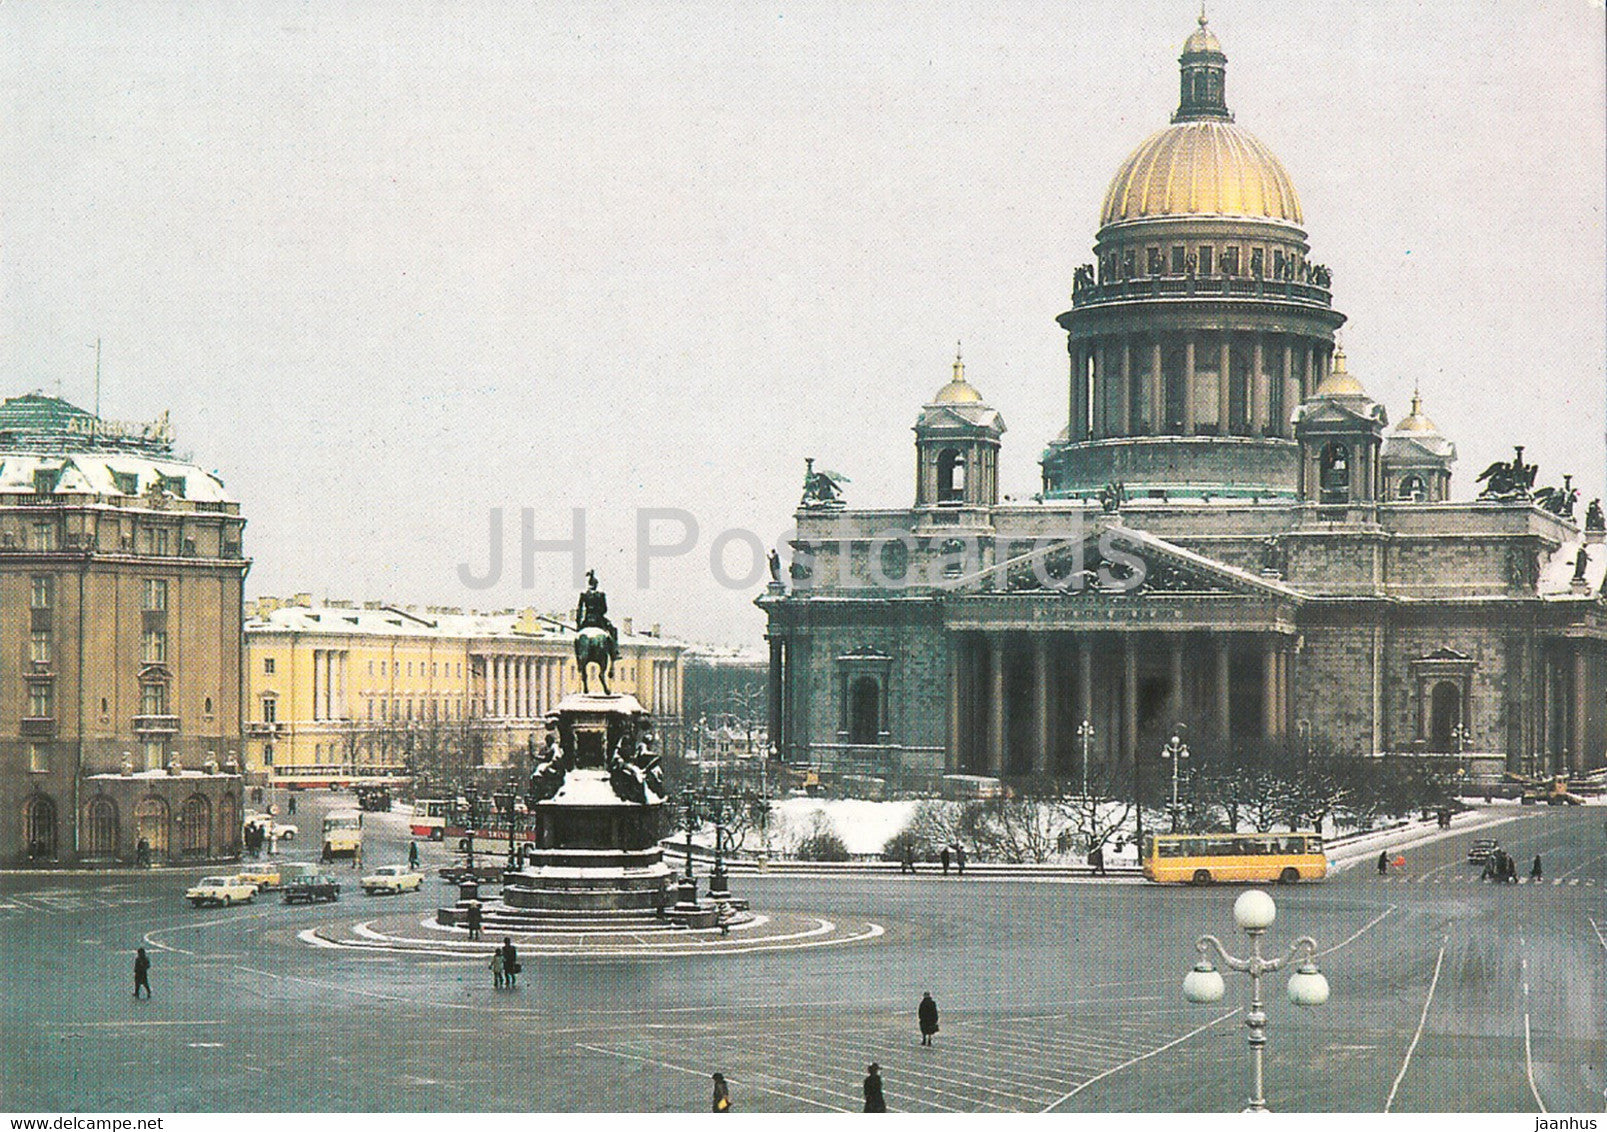 Leningrad - St Petersburg - St Isaac's Squzre - bus Ikarus - 1984 - Russia USSR - unused - JH Postcards